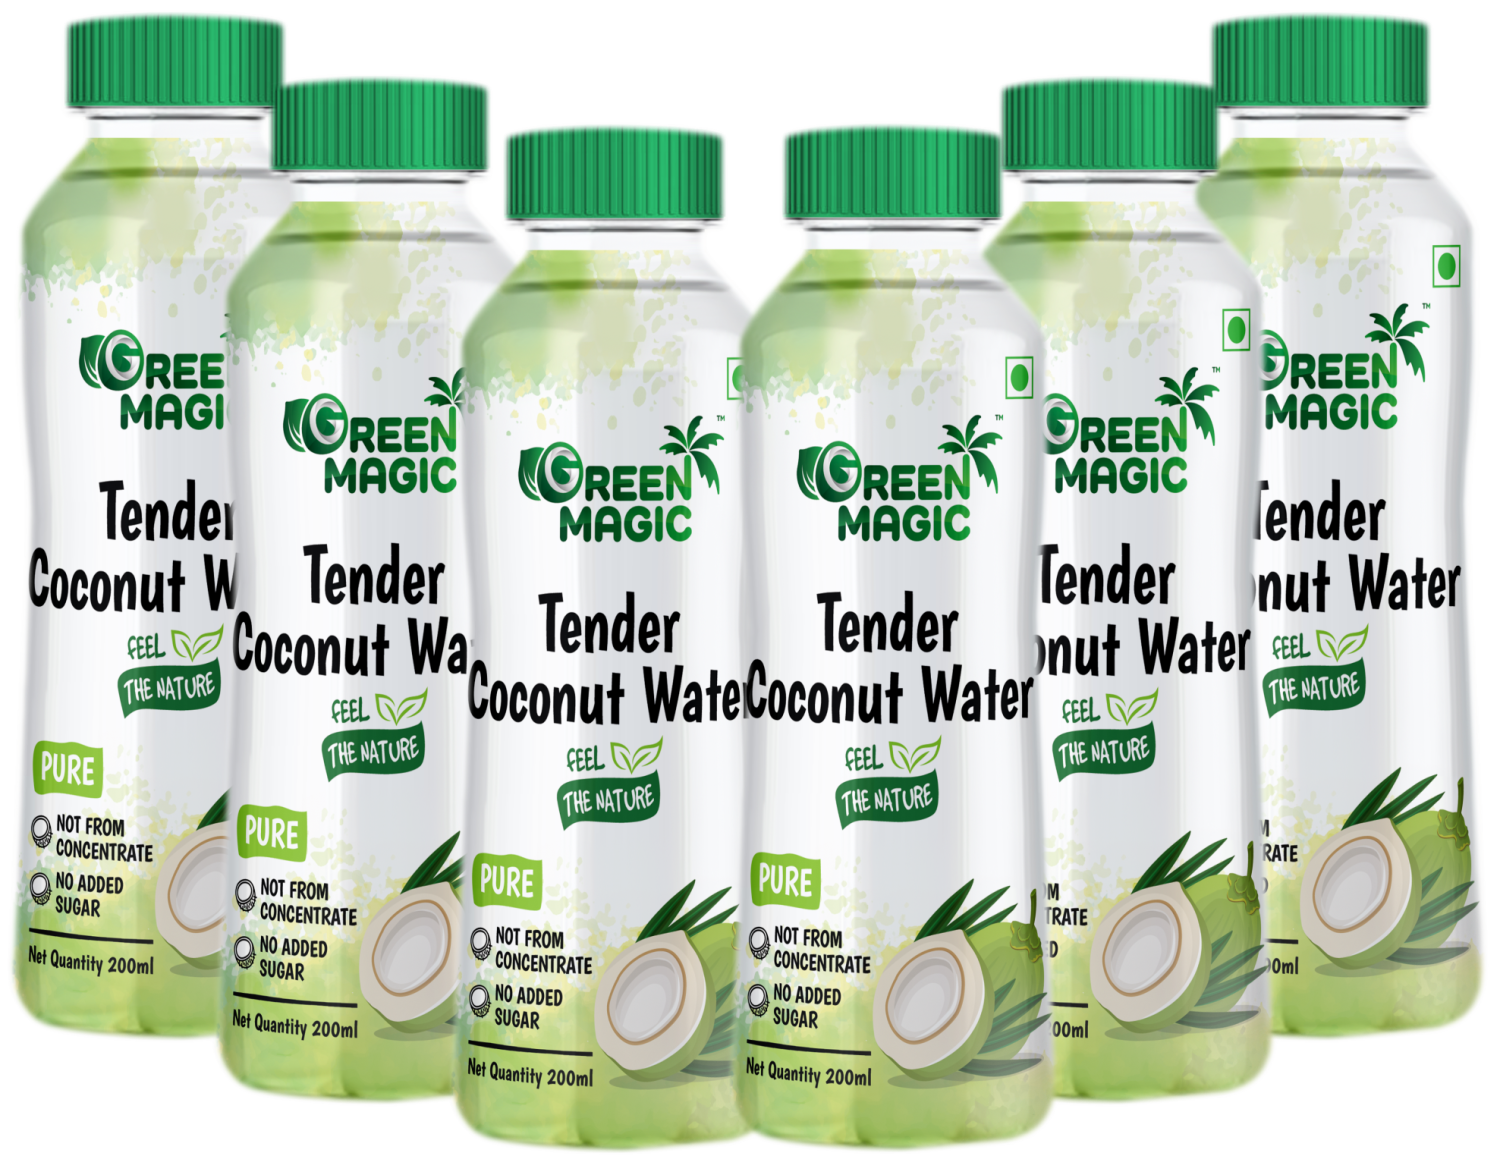 Green Magic Tender coconut water